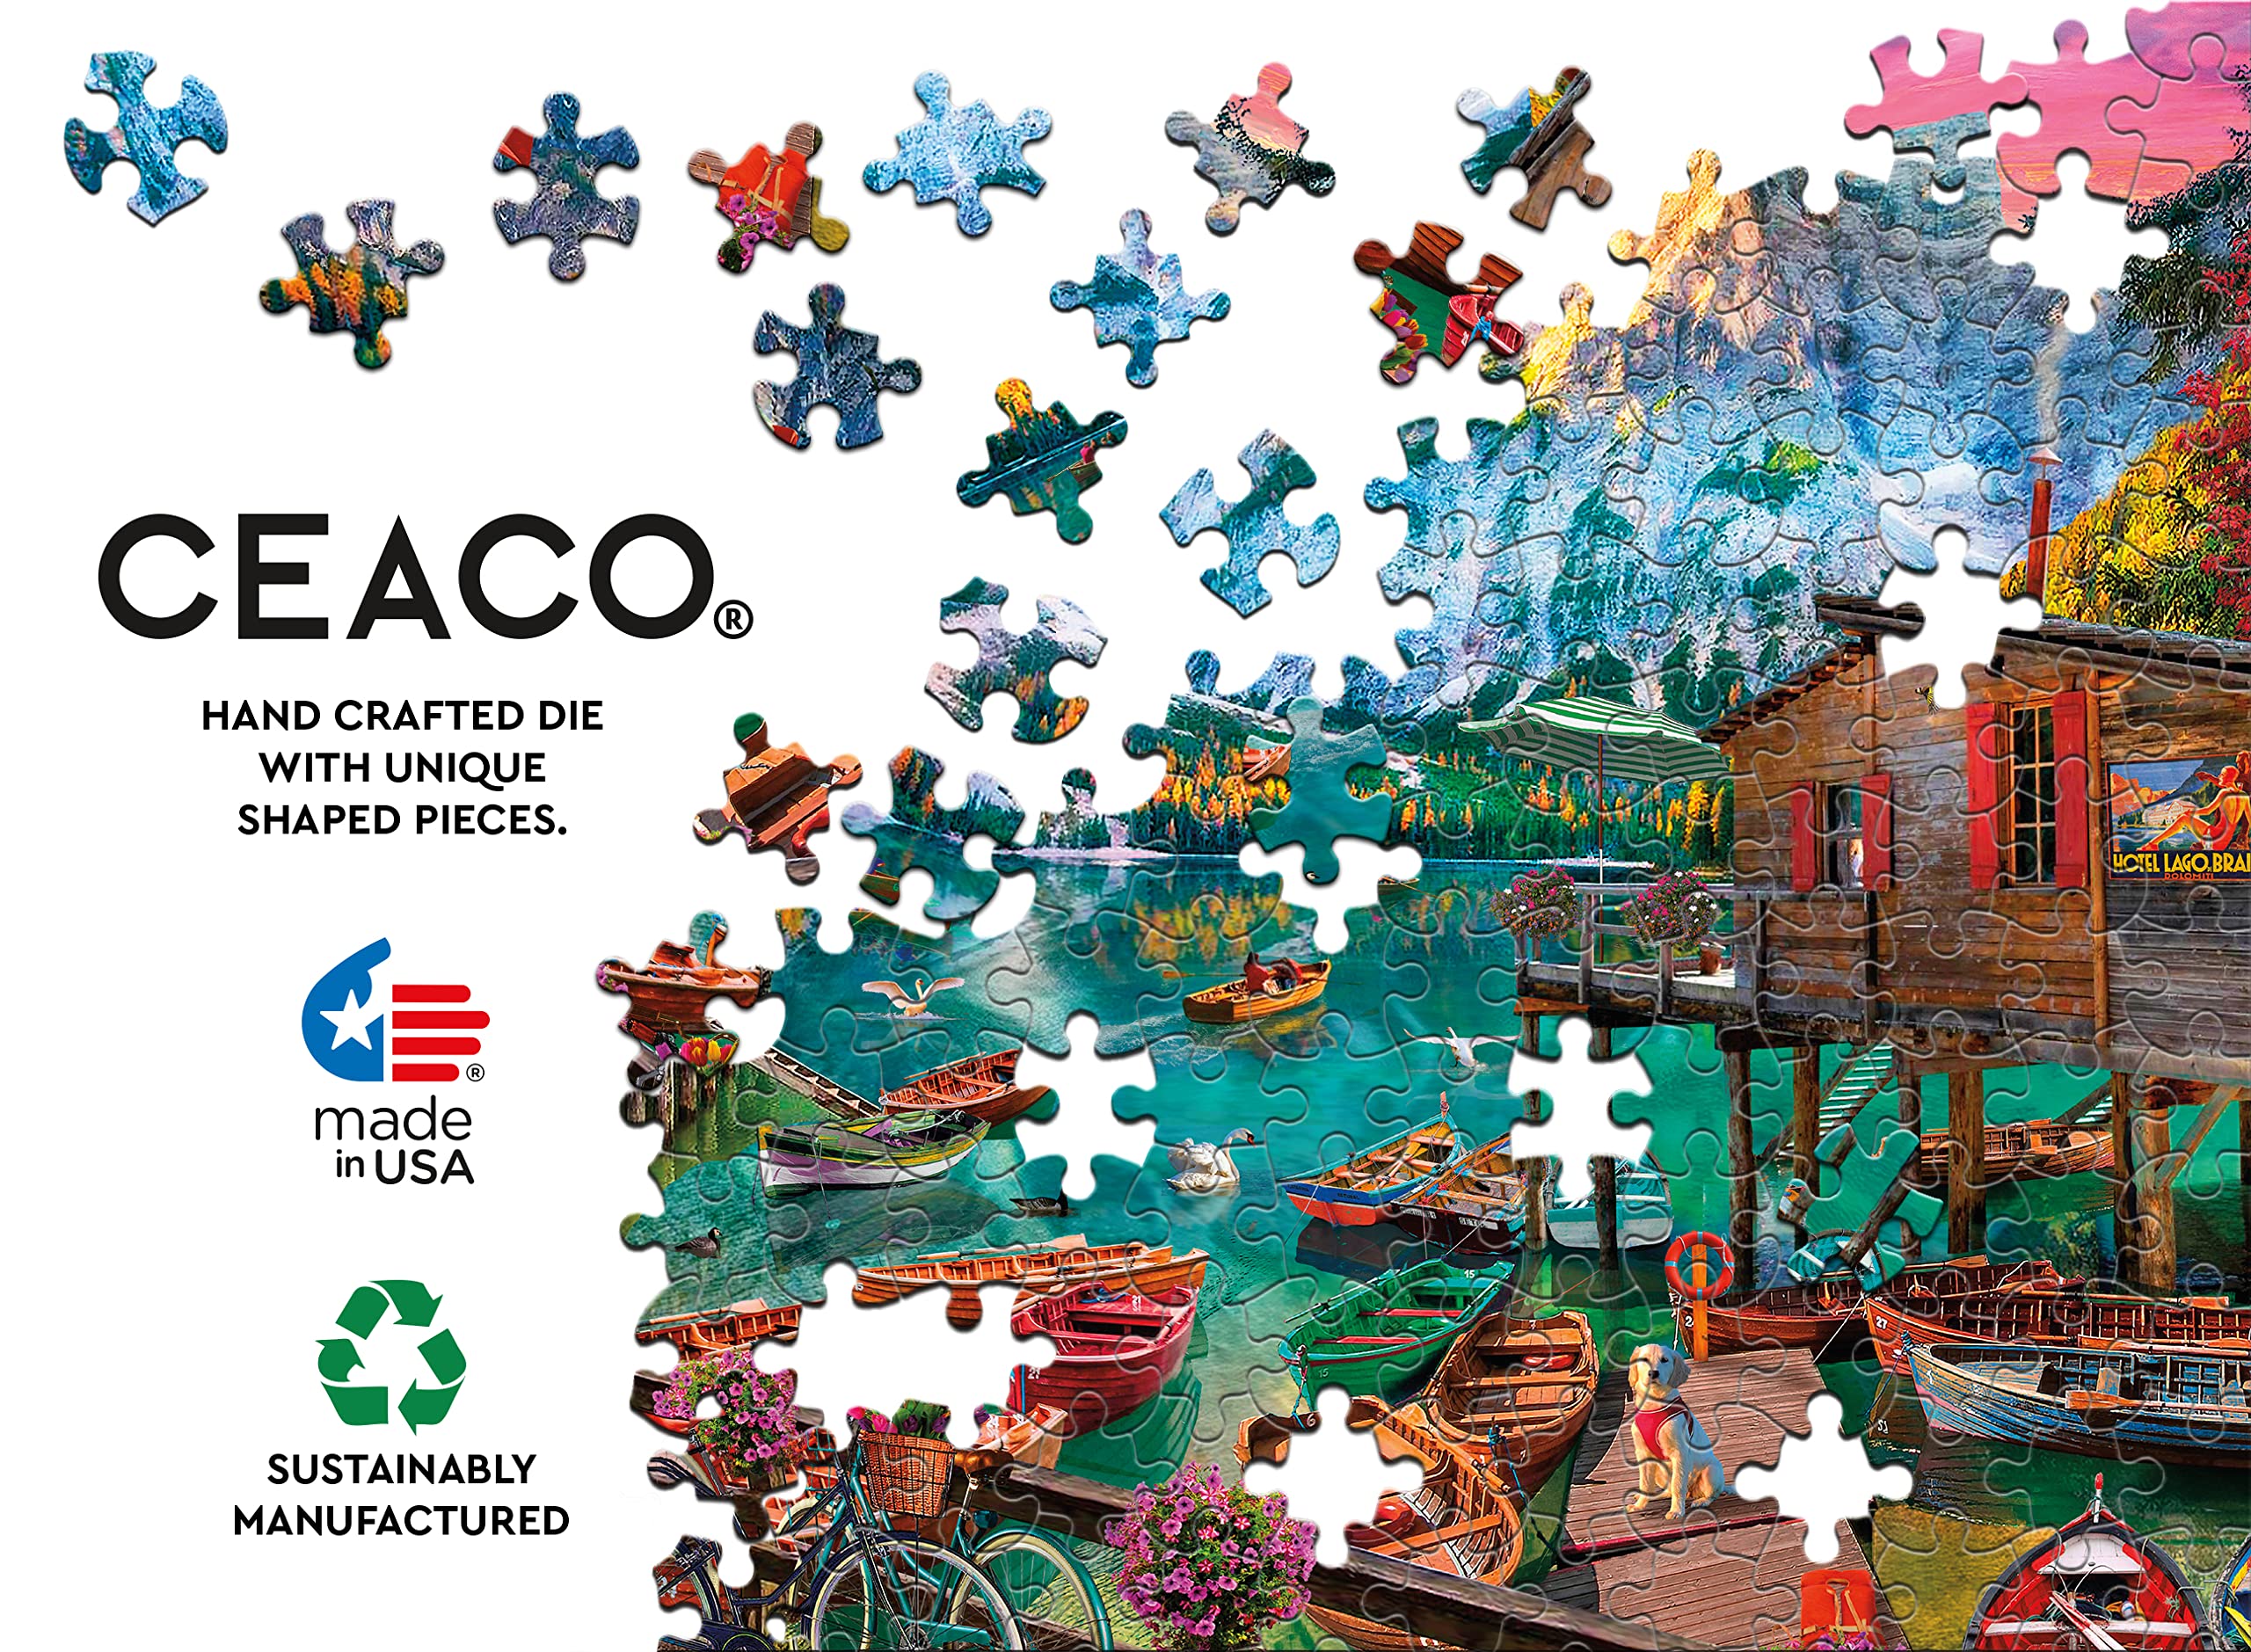 Ceaco - Lago Di Braies, Italy - 1500 Piece Jigsaw Puzzle